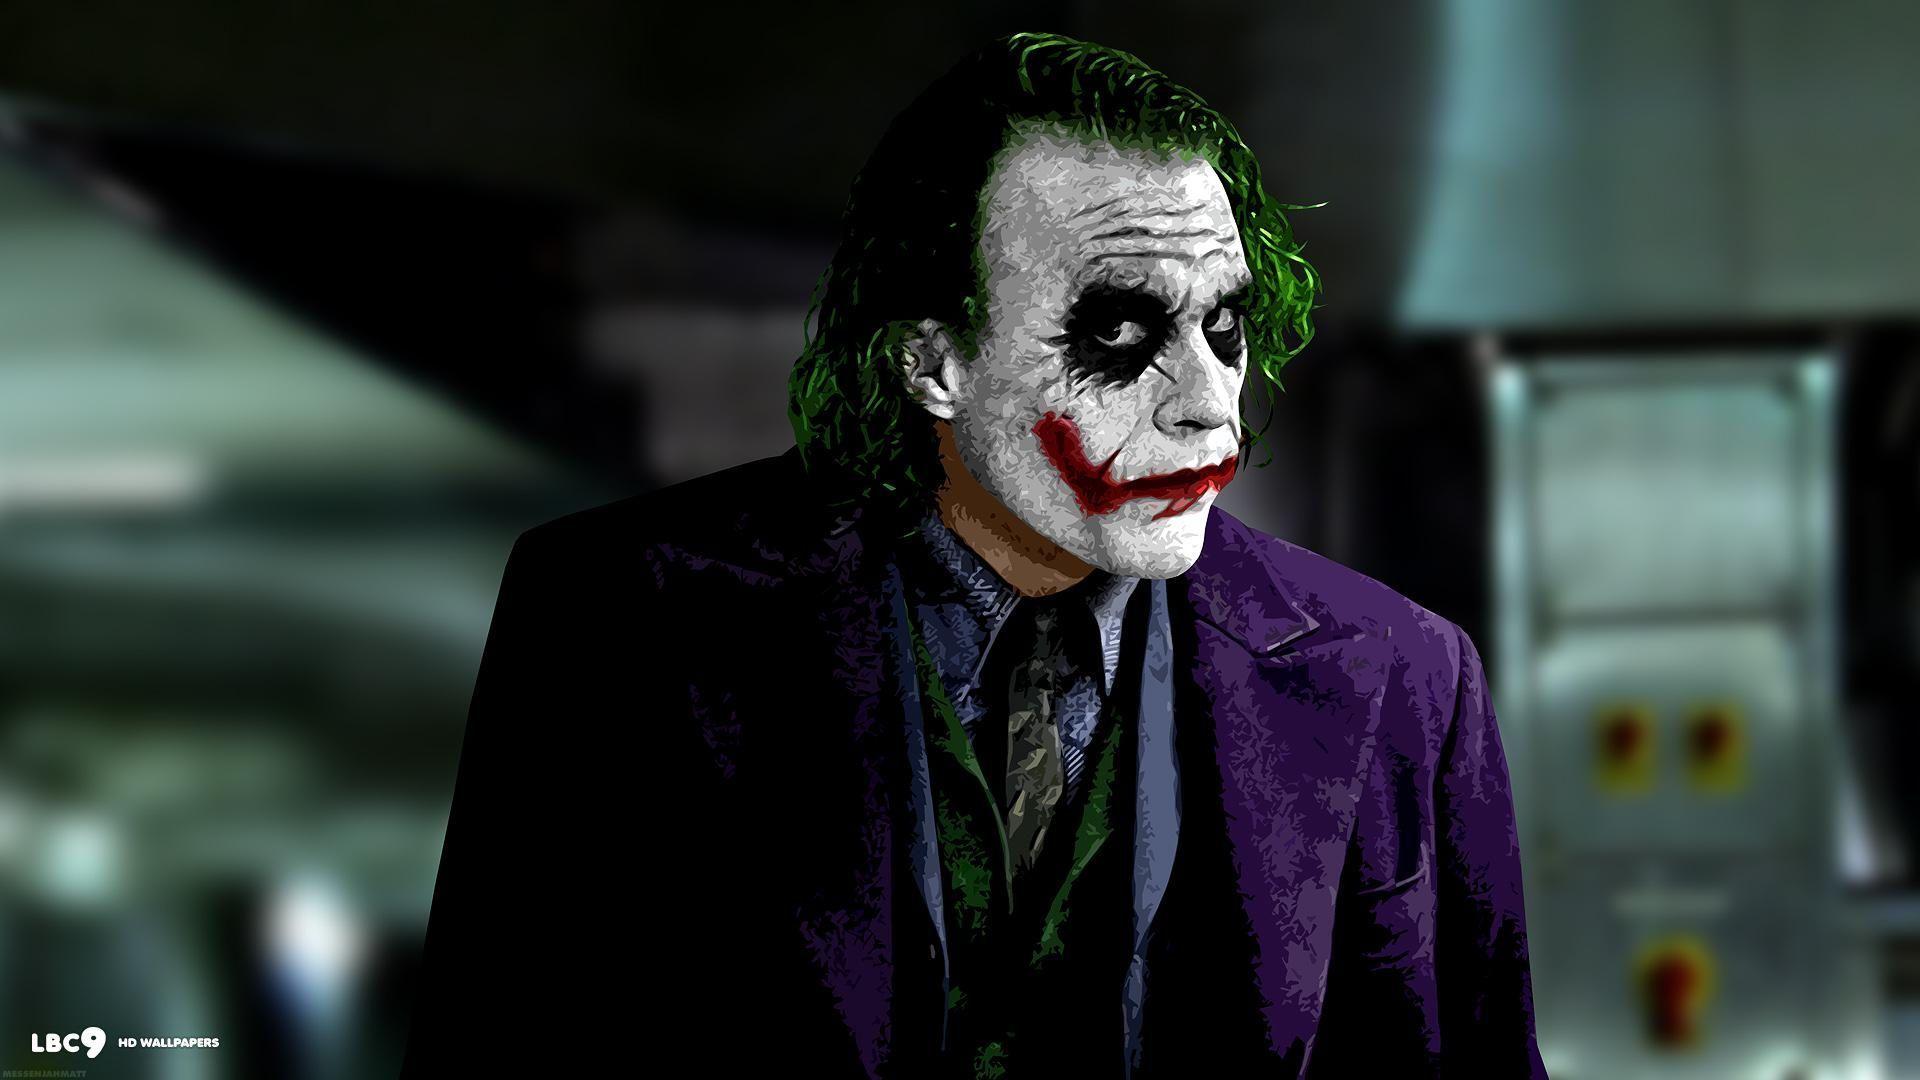 Dark Knight Joker Wallpapers Top Free Dark Knight Joker Backgrounds Wallpaperaccess